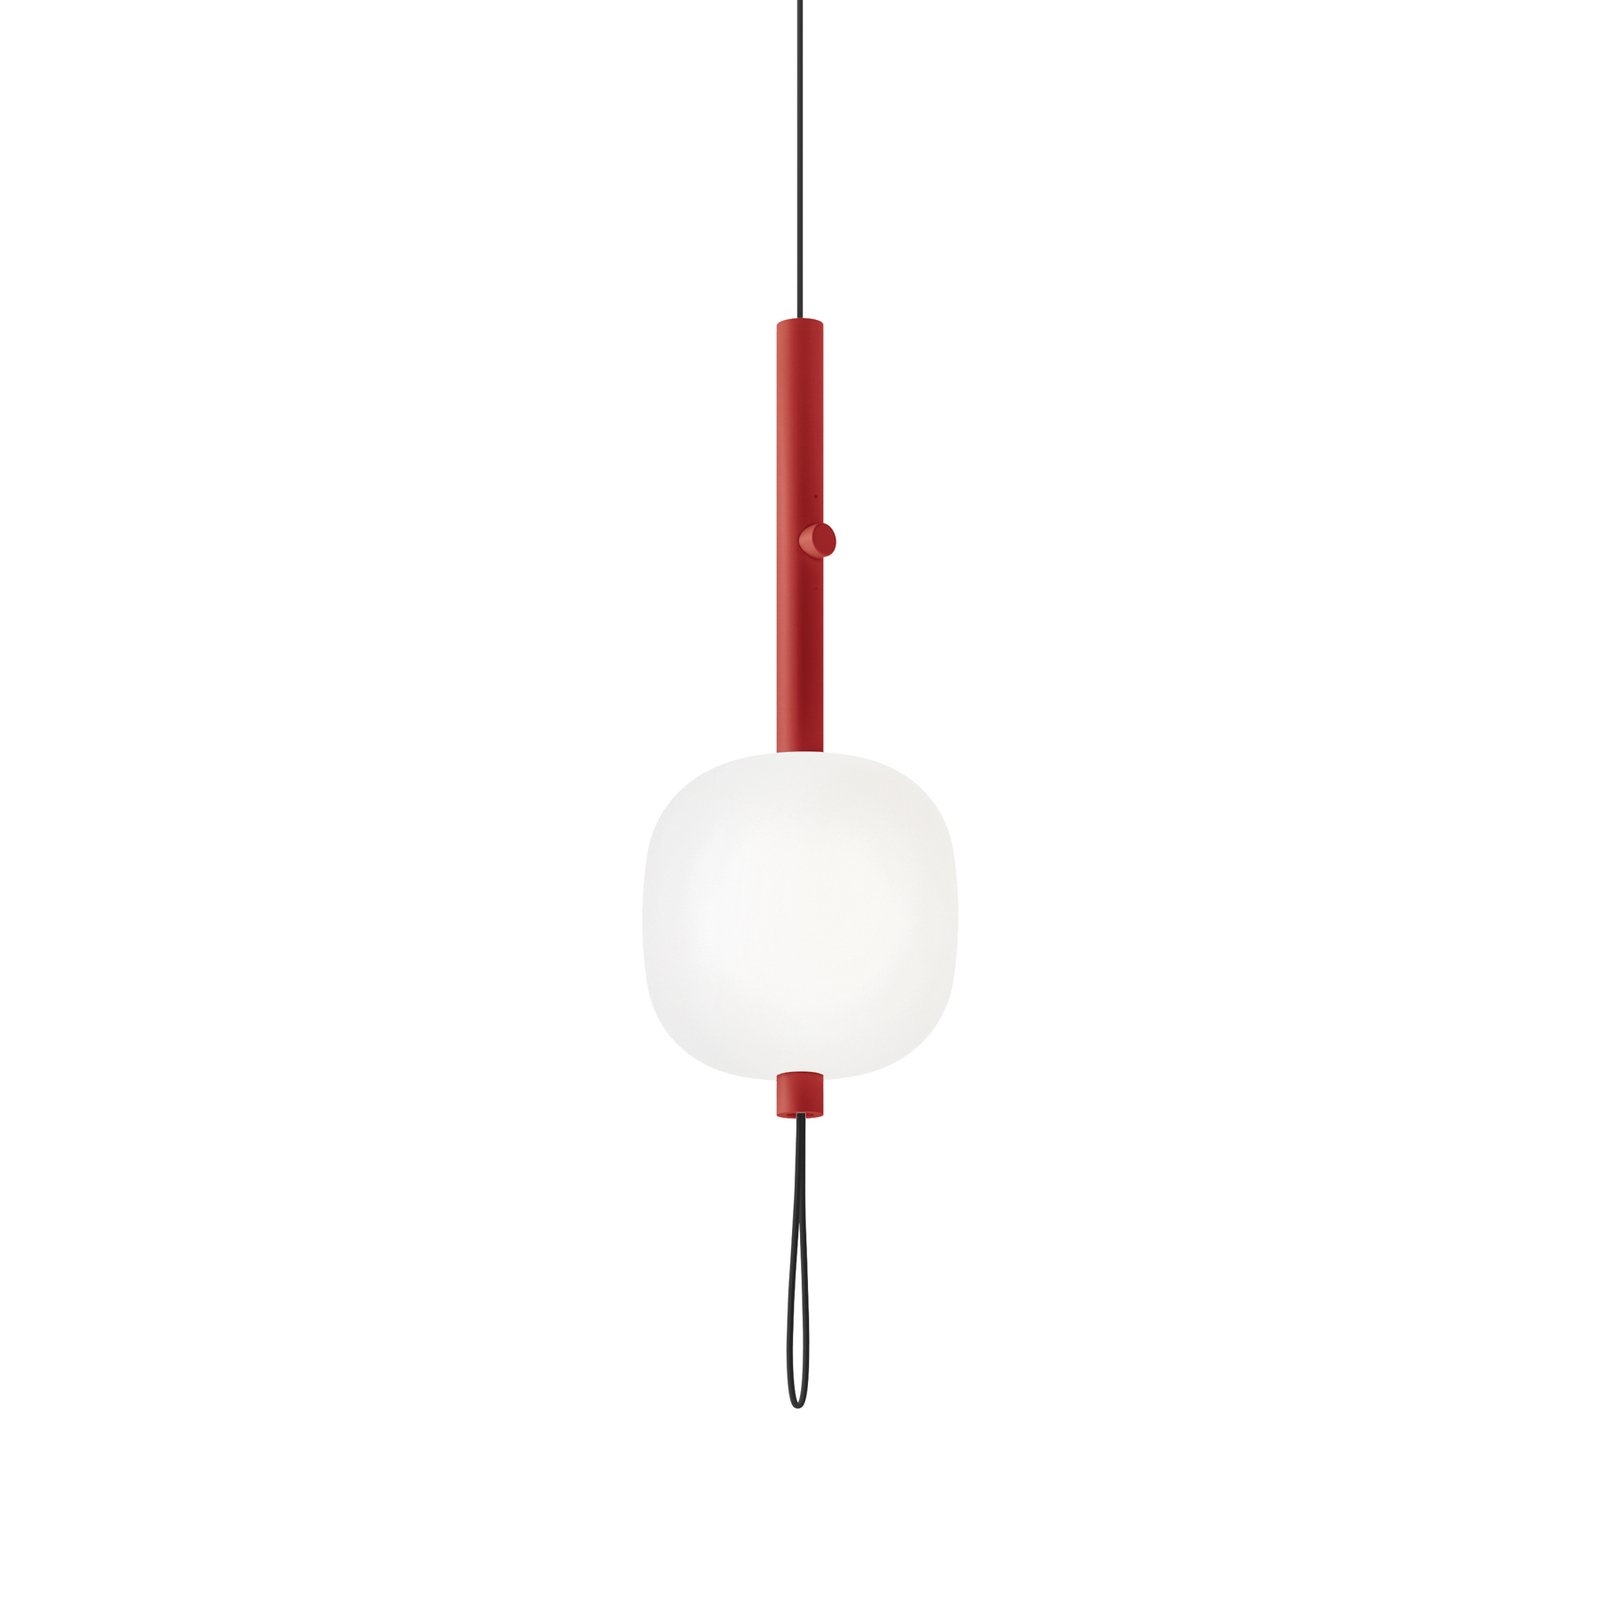 Motus LED hanging light made of glass, red